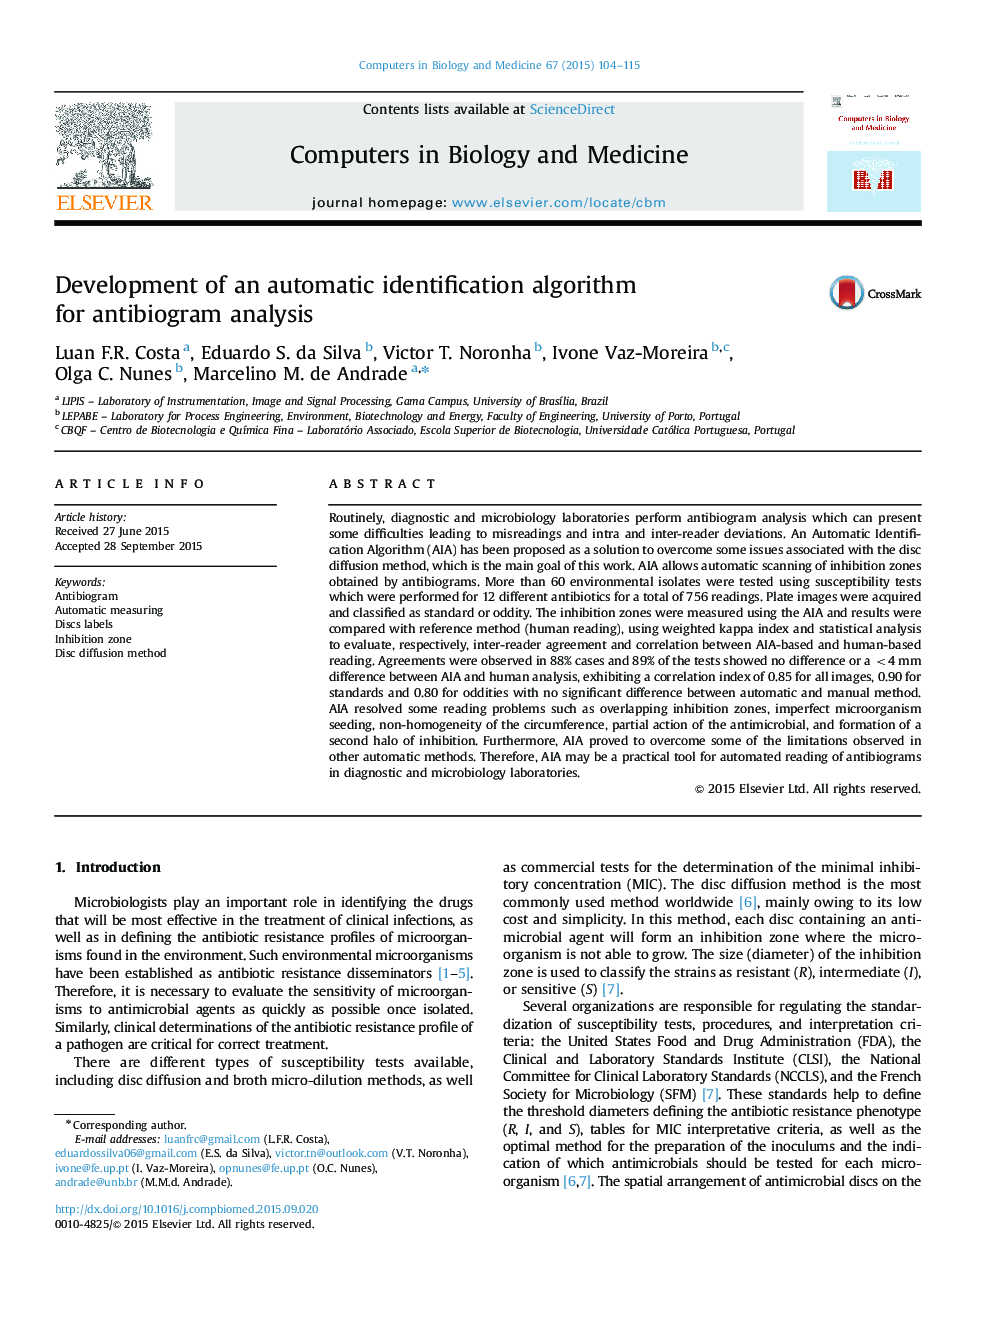 Development of an automatic identification algorithm for antibiogram analysis